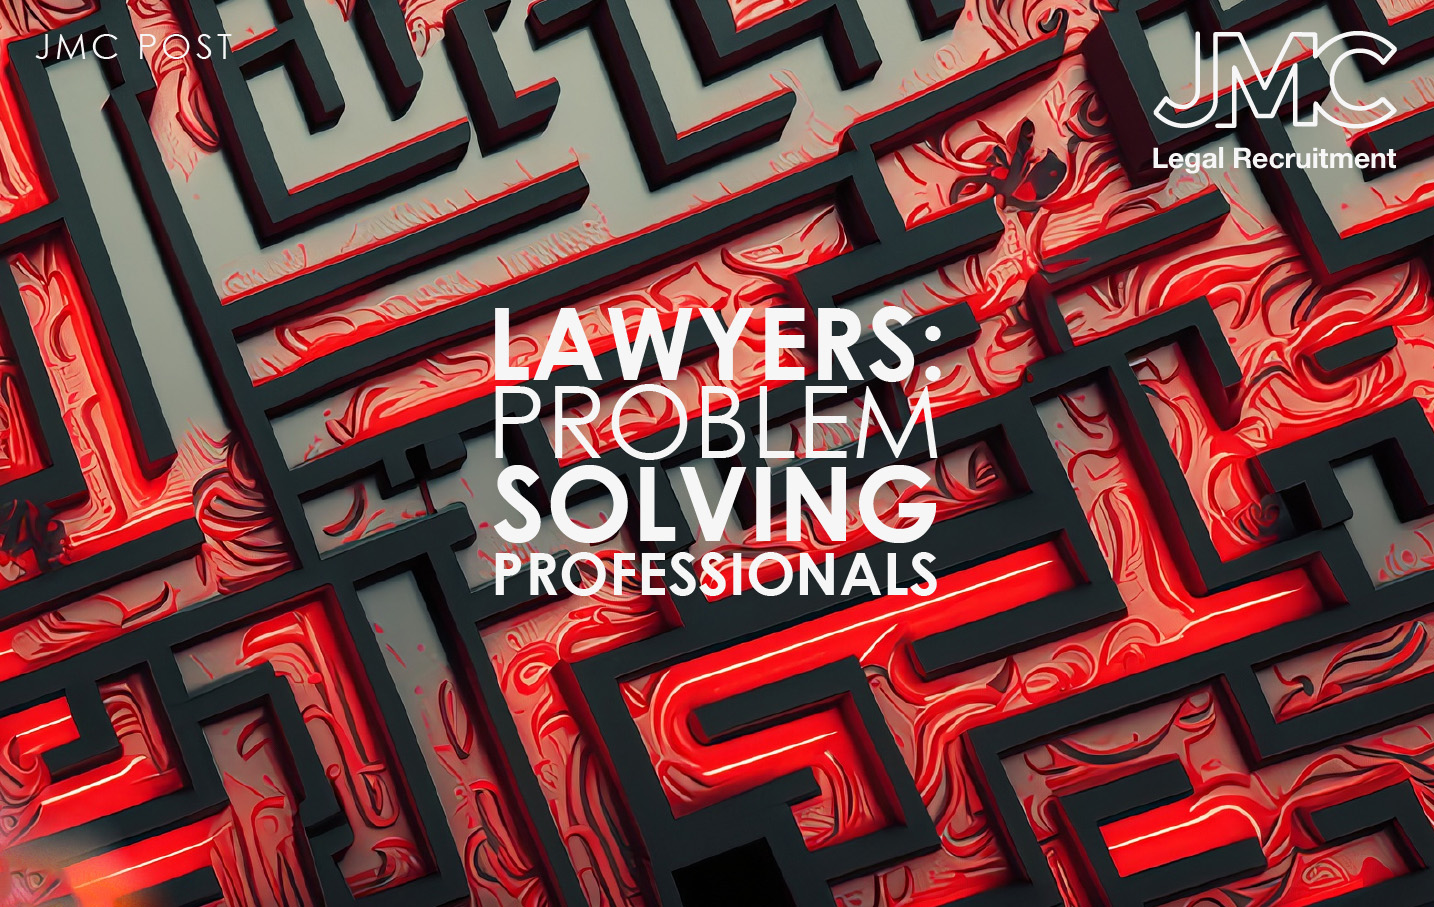 Lawyers Problem Solving Professionals